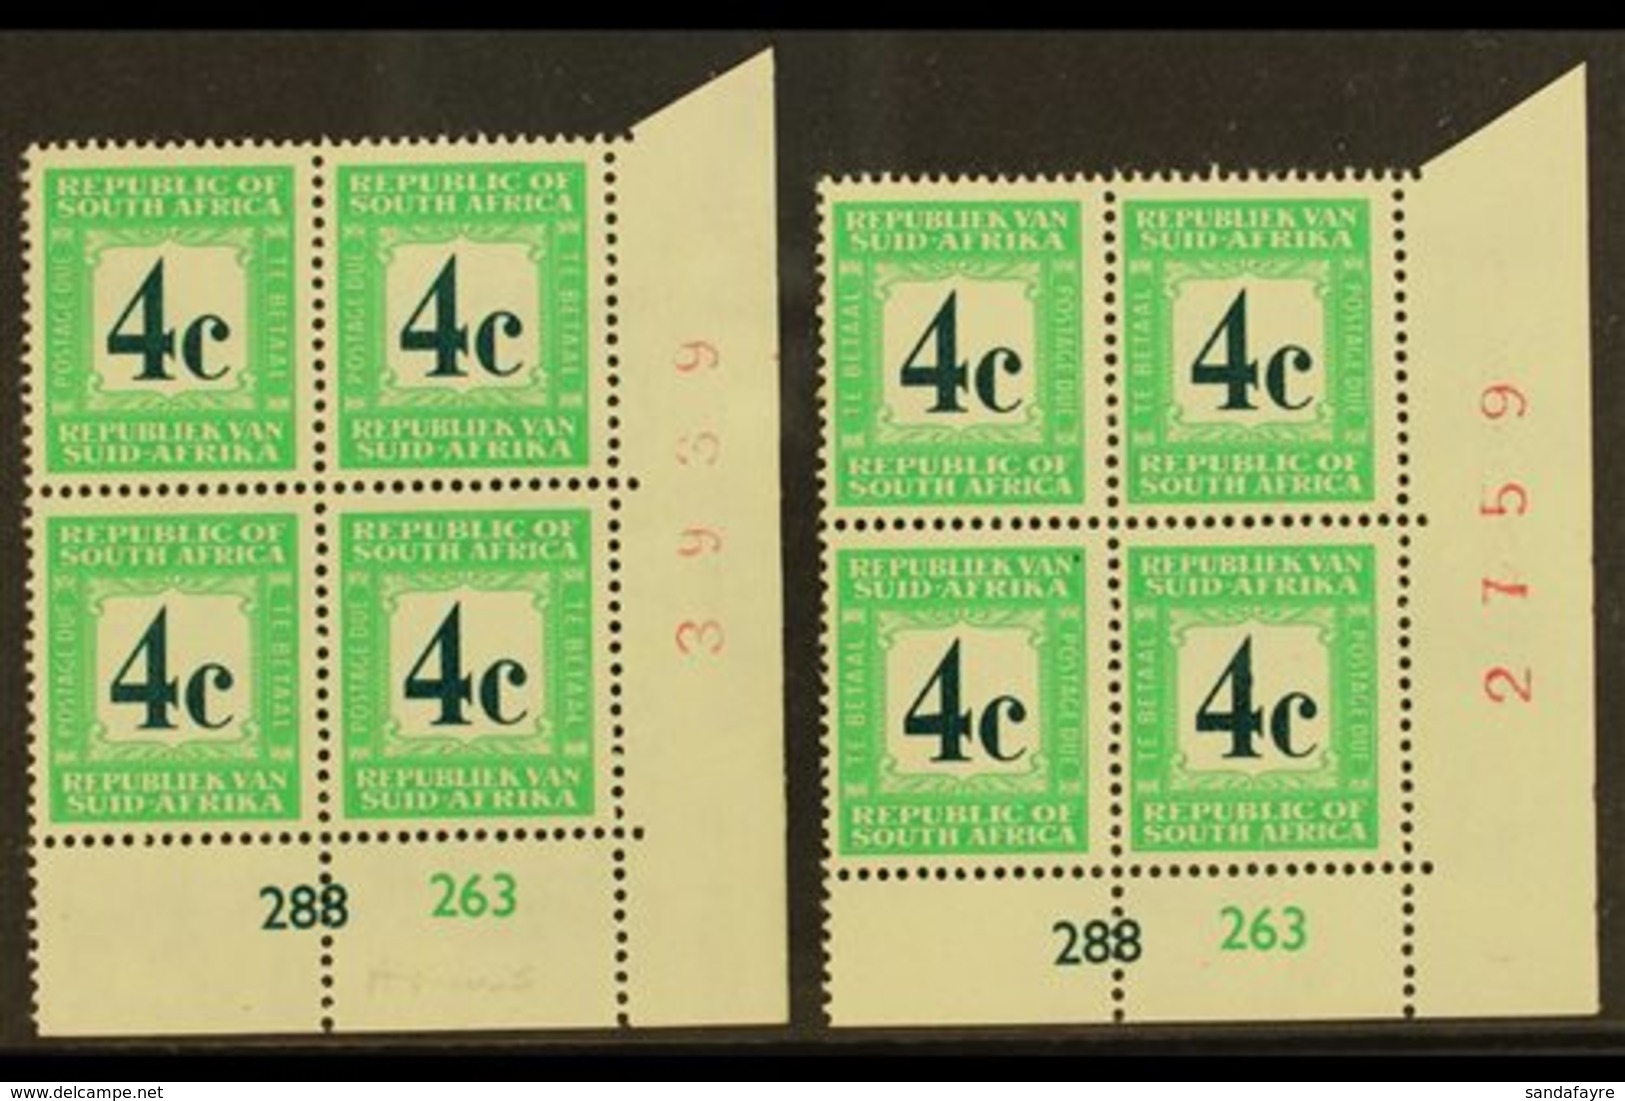 POSTAGE DUES 1961-9 4c Deep Myrtle-green & Light Emerald, Cylinder Blocks Of 4 Of Each Language Setting, SG D54, 54a, Ne - Zonder Classificatie